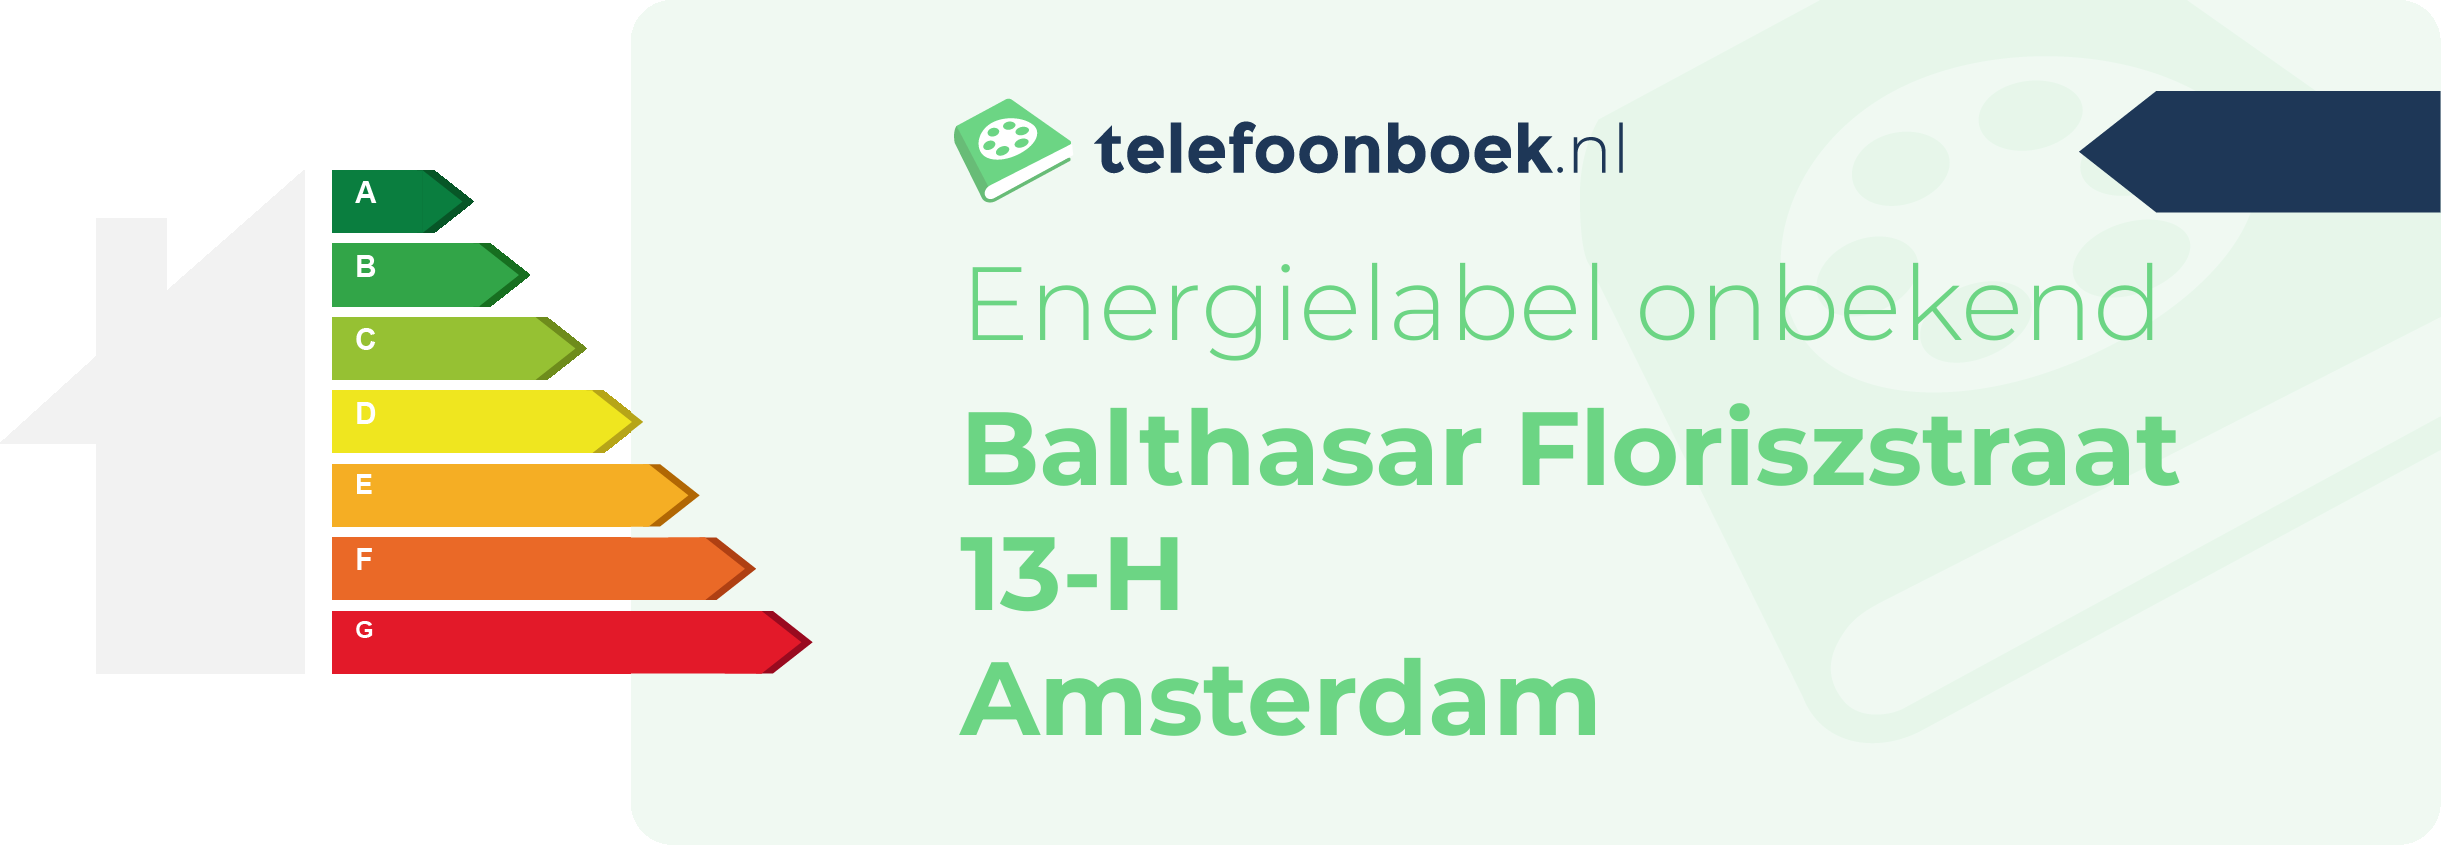 Energielabel Balthasar Floriszstraat 13-H Amsterdam